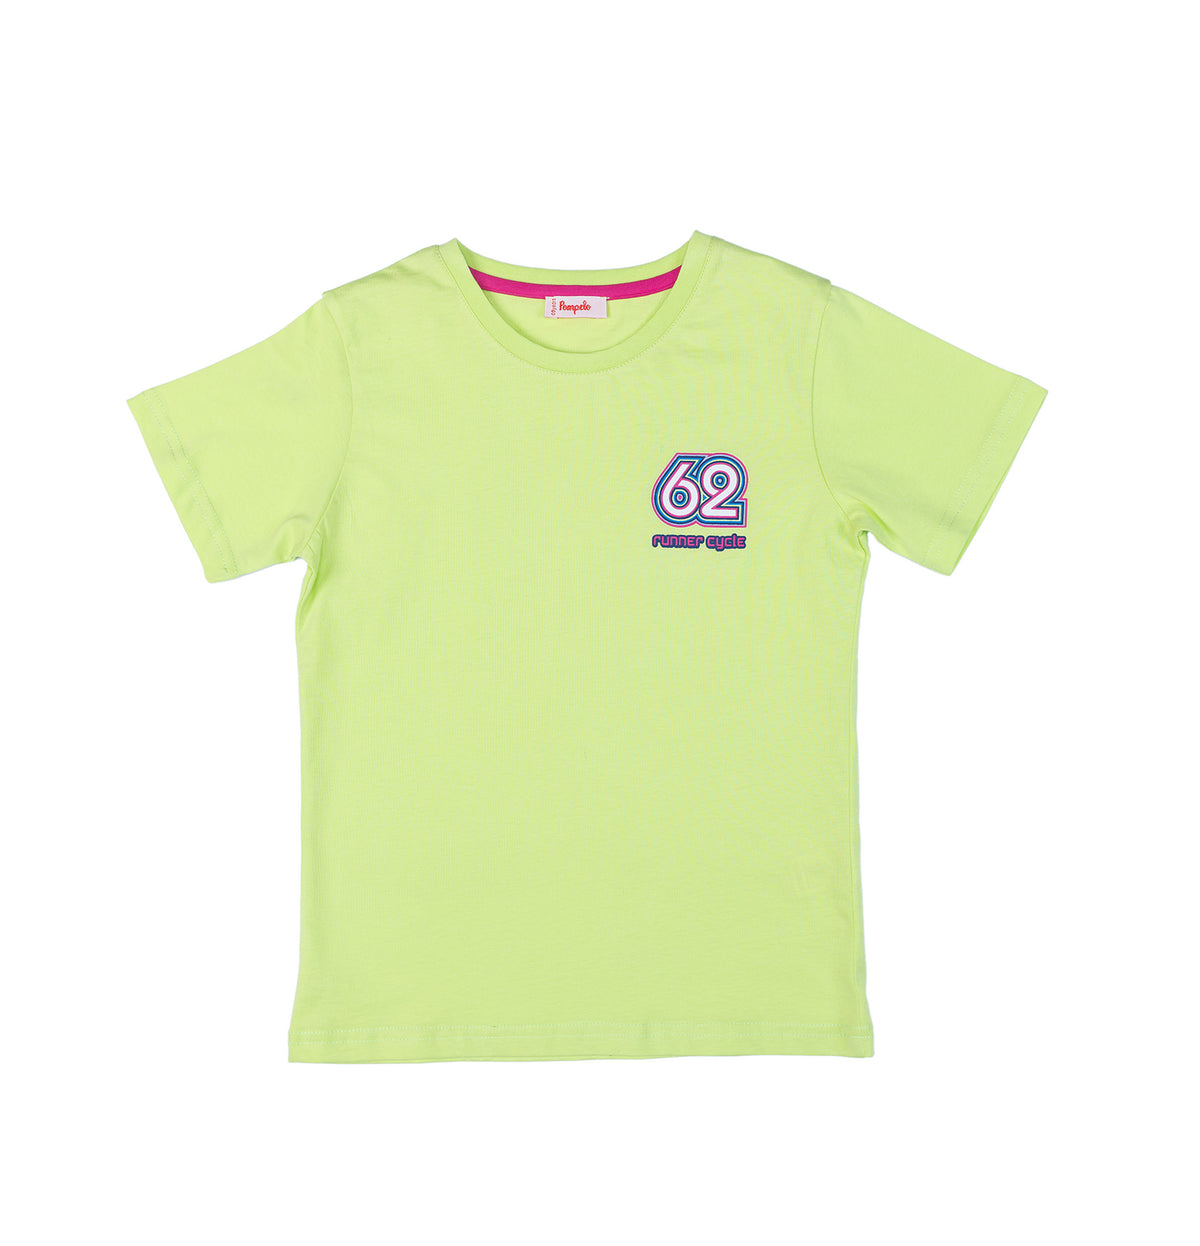 Stylish neon half sleeve tshirt for boys by Pompelo